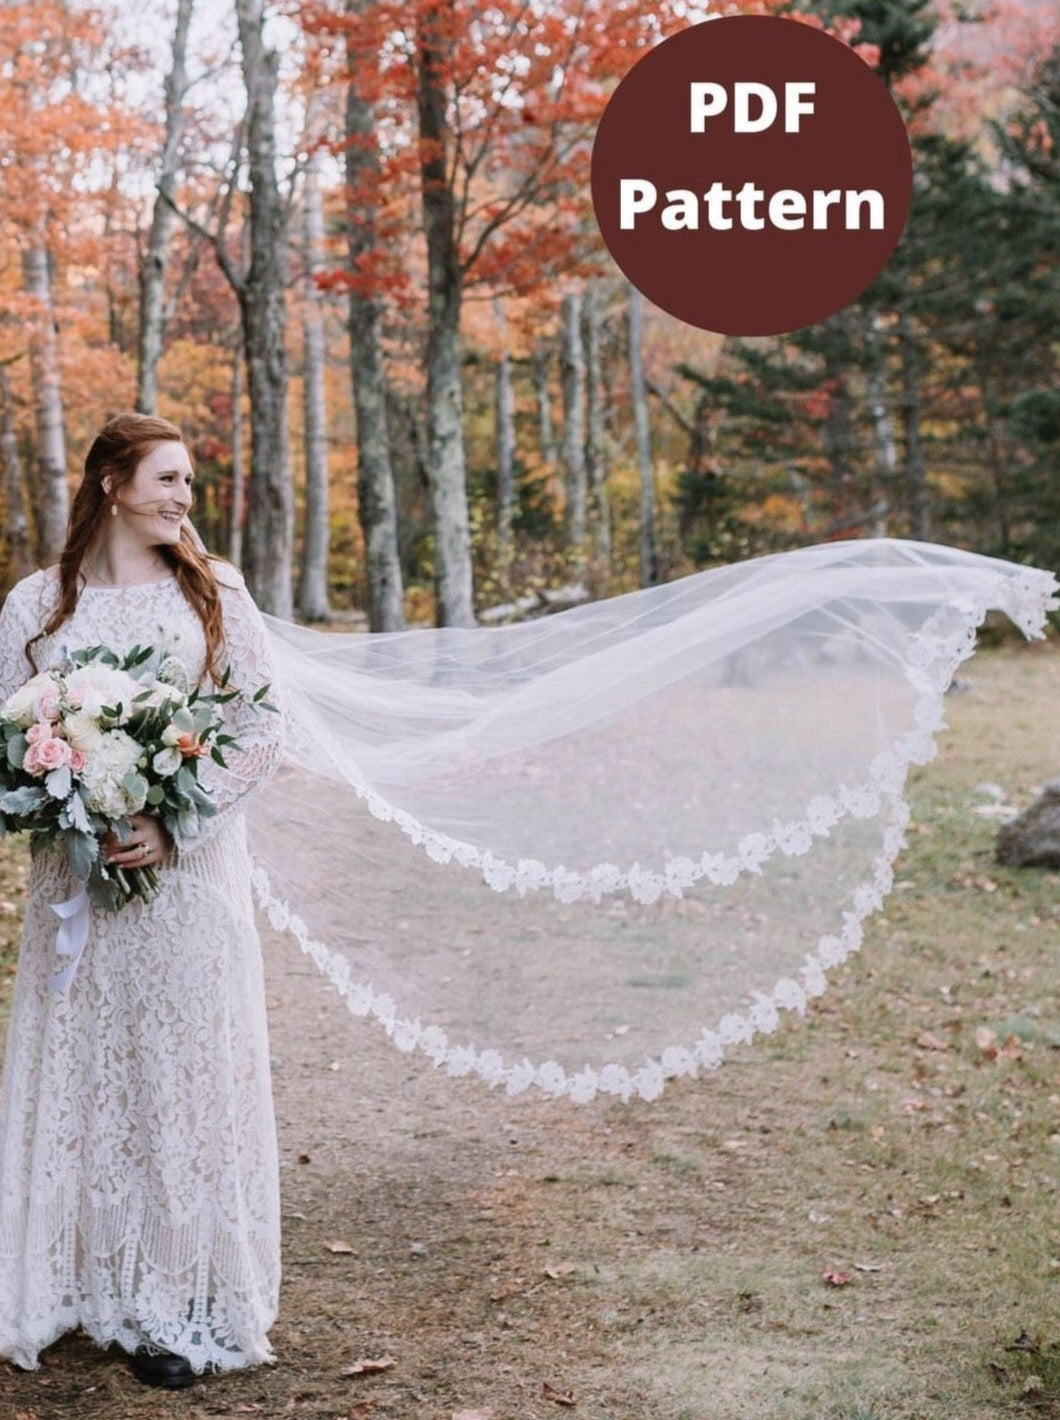 A Quick Wedding Veil Guide